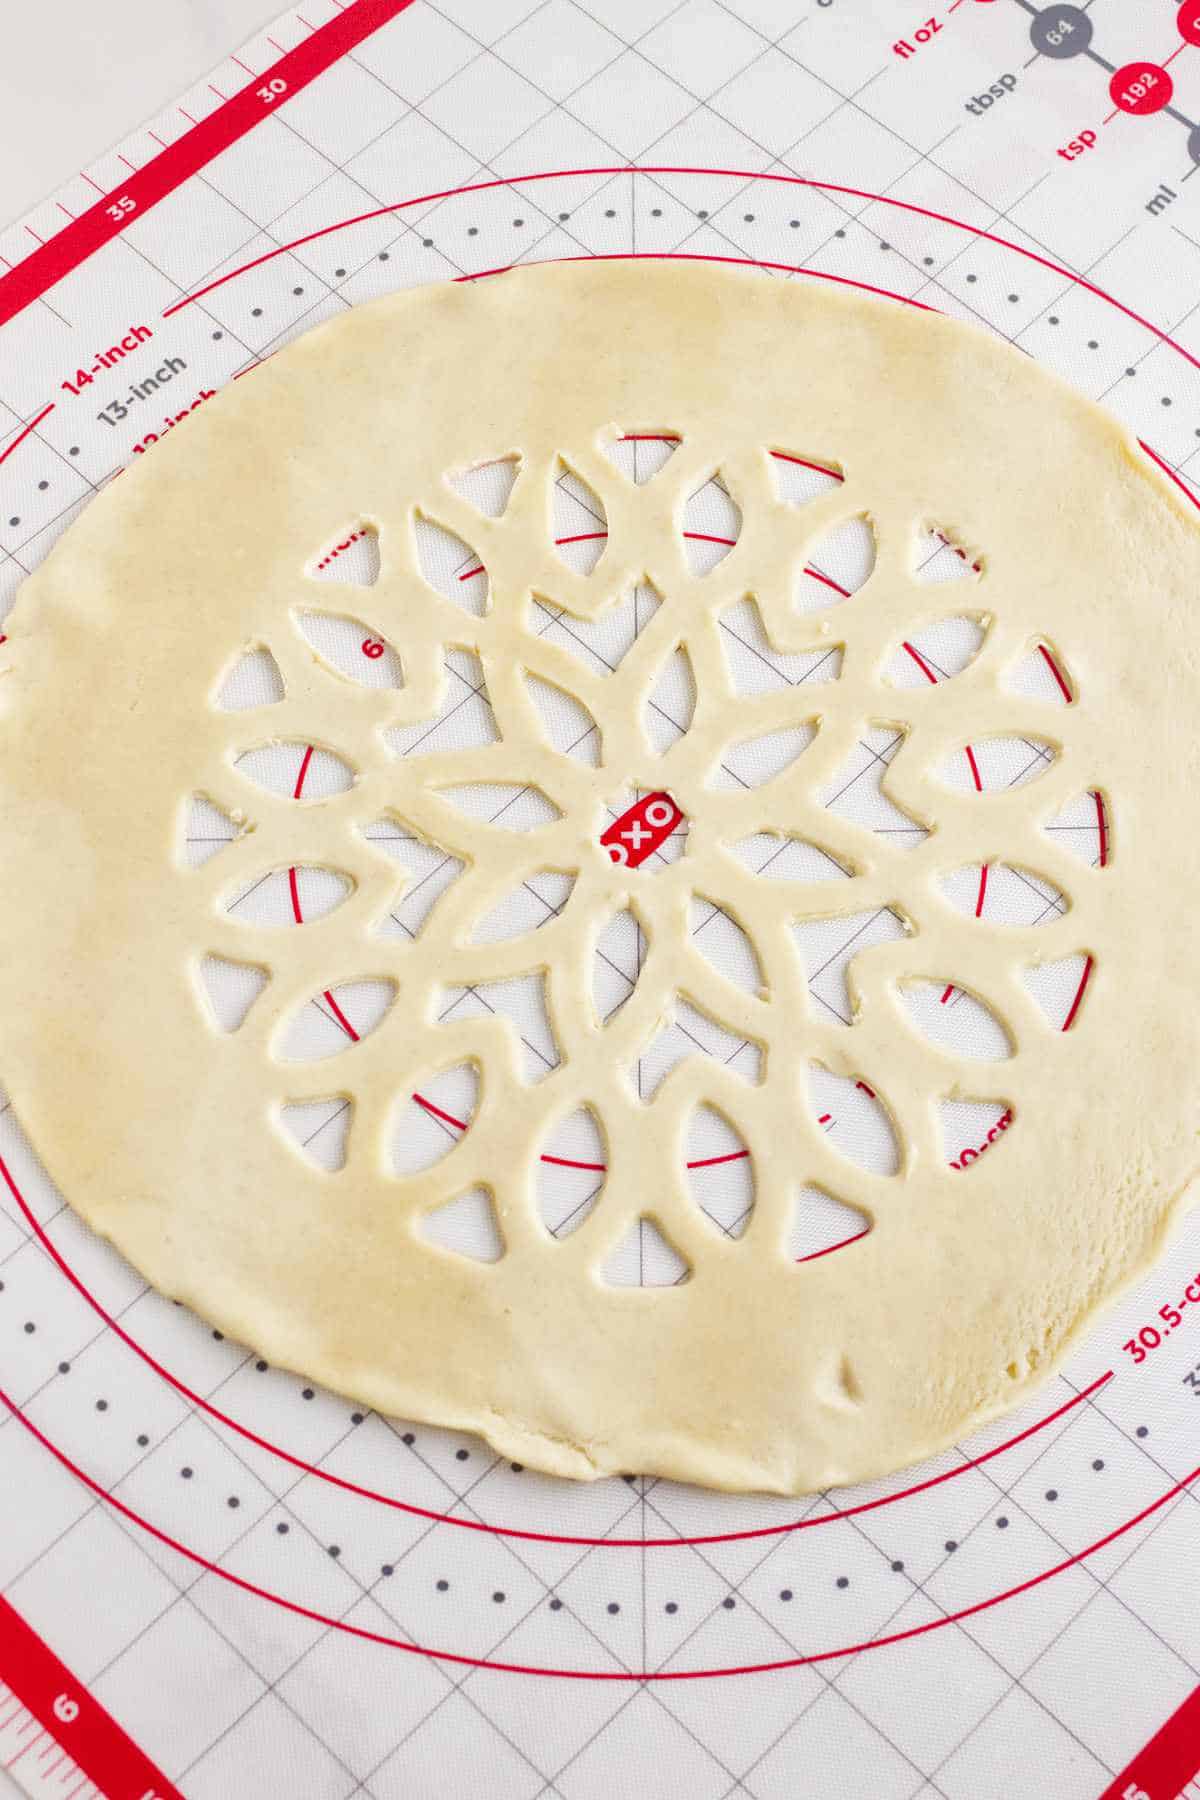 stencil cut lattice pie crust on a pastry mat.